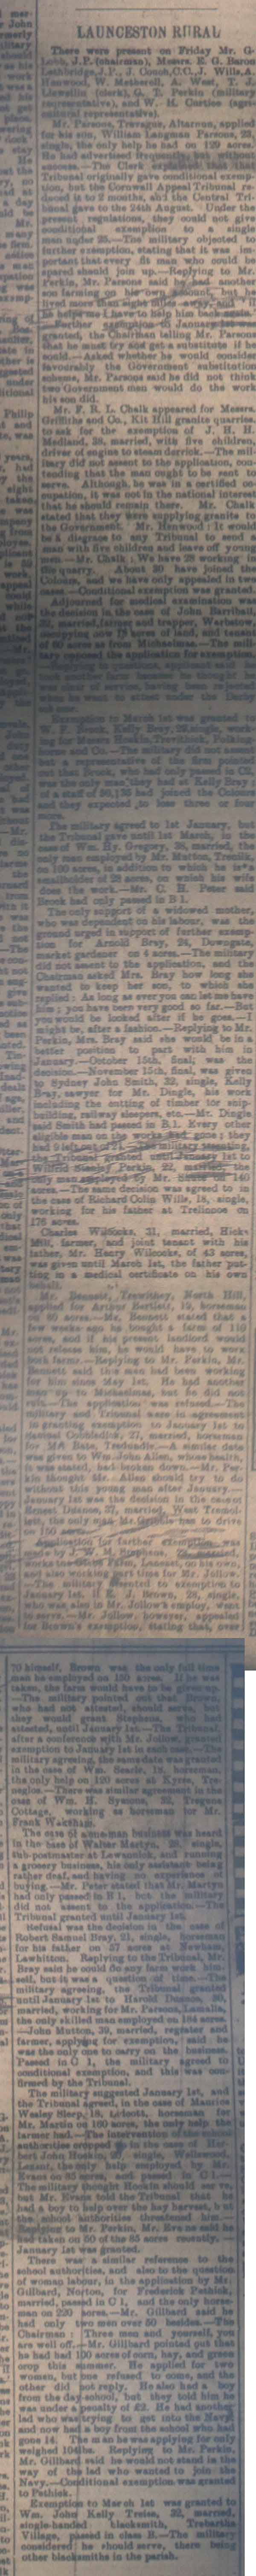 Launceston Tribunal September 30th, 1916